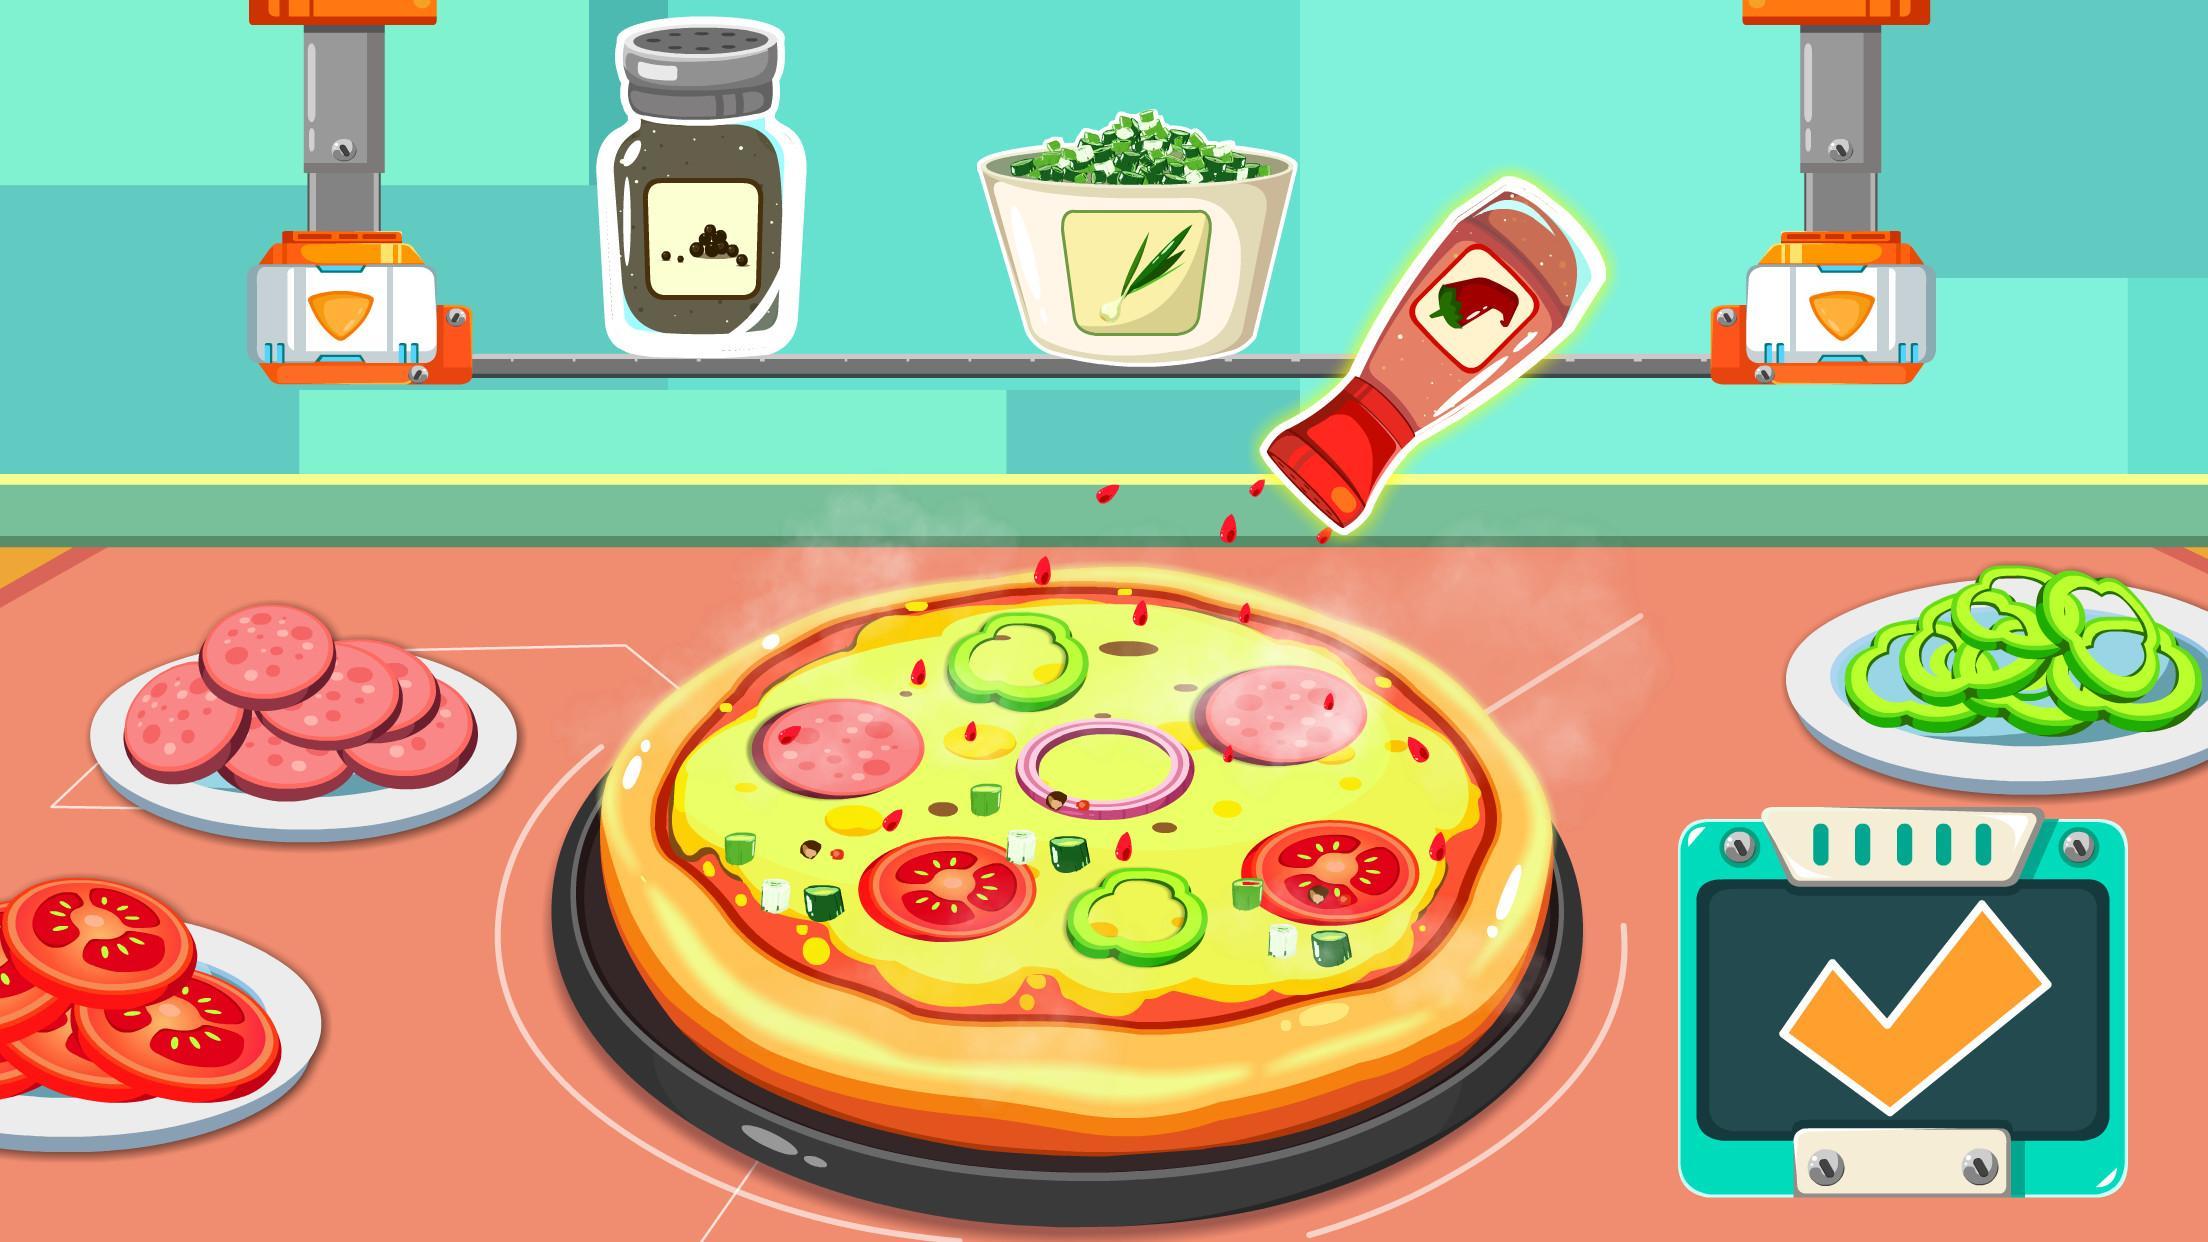 Little Panda’s Space Kitchen - Kids Cooking 8.57.00.00 Screenshot 10